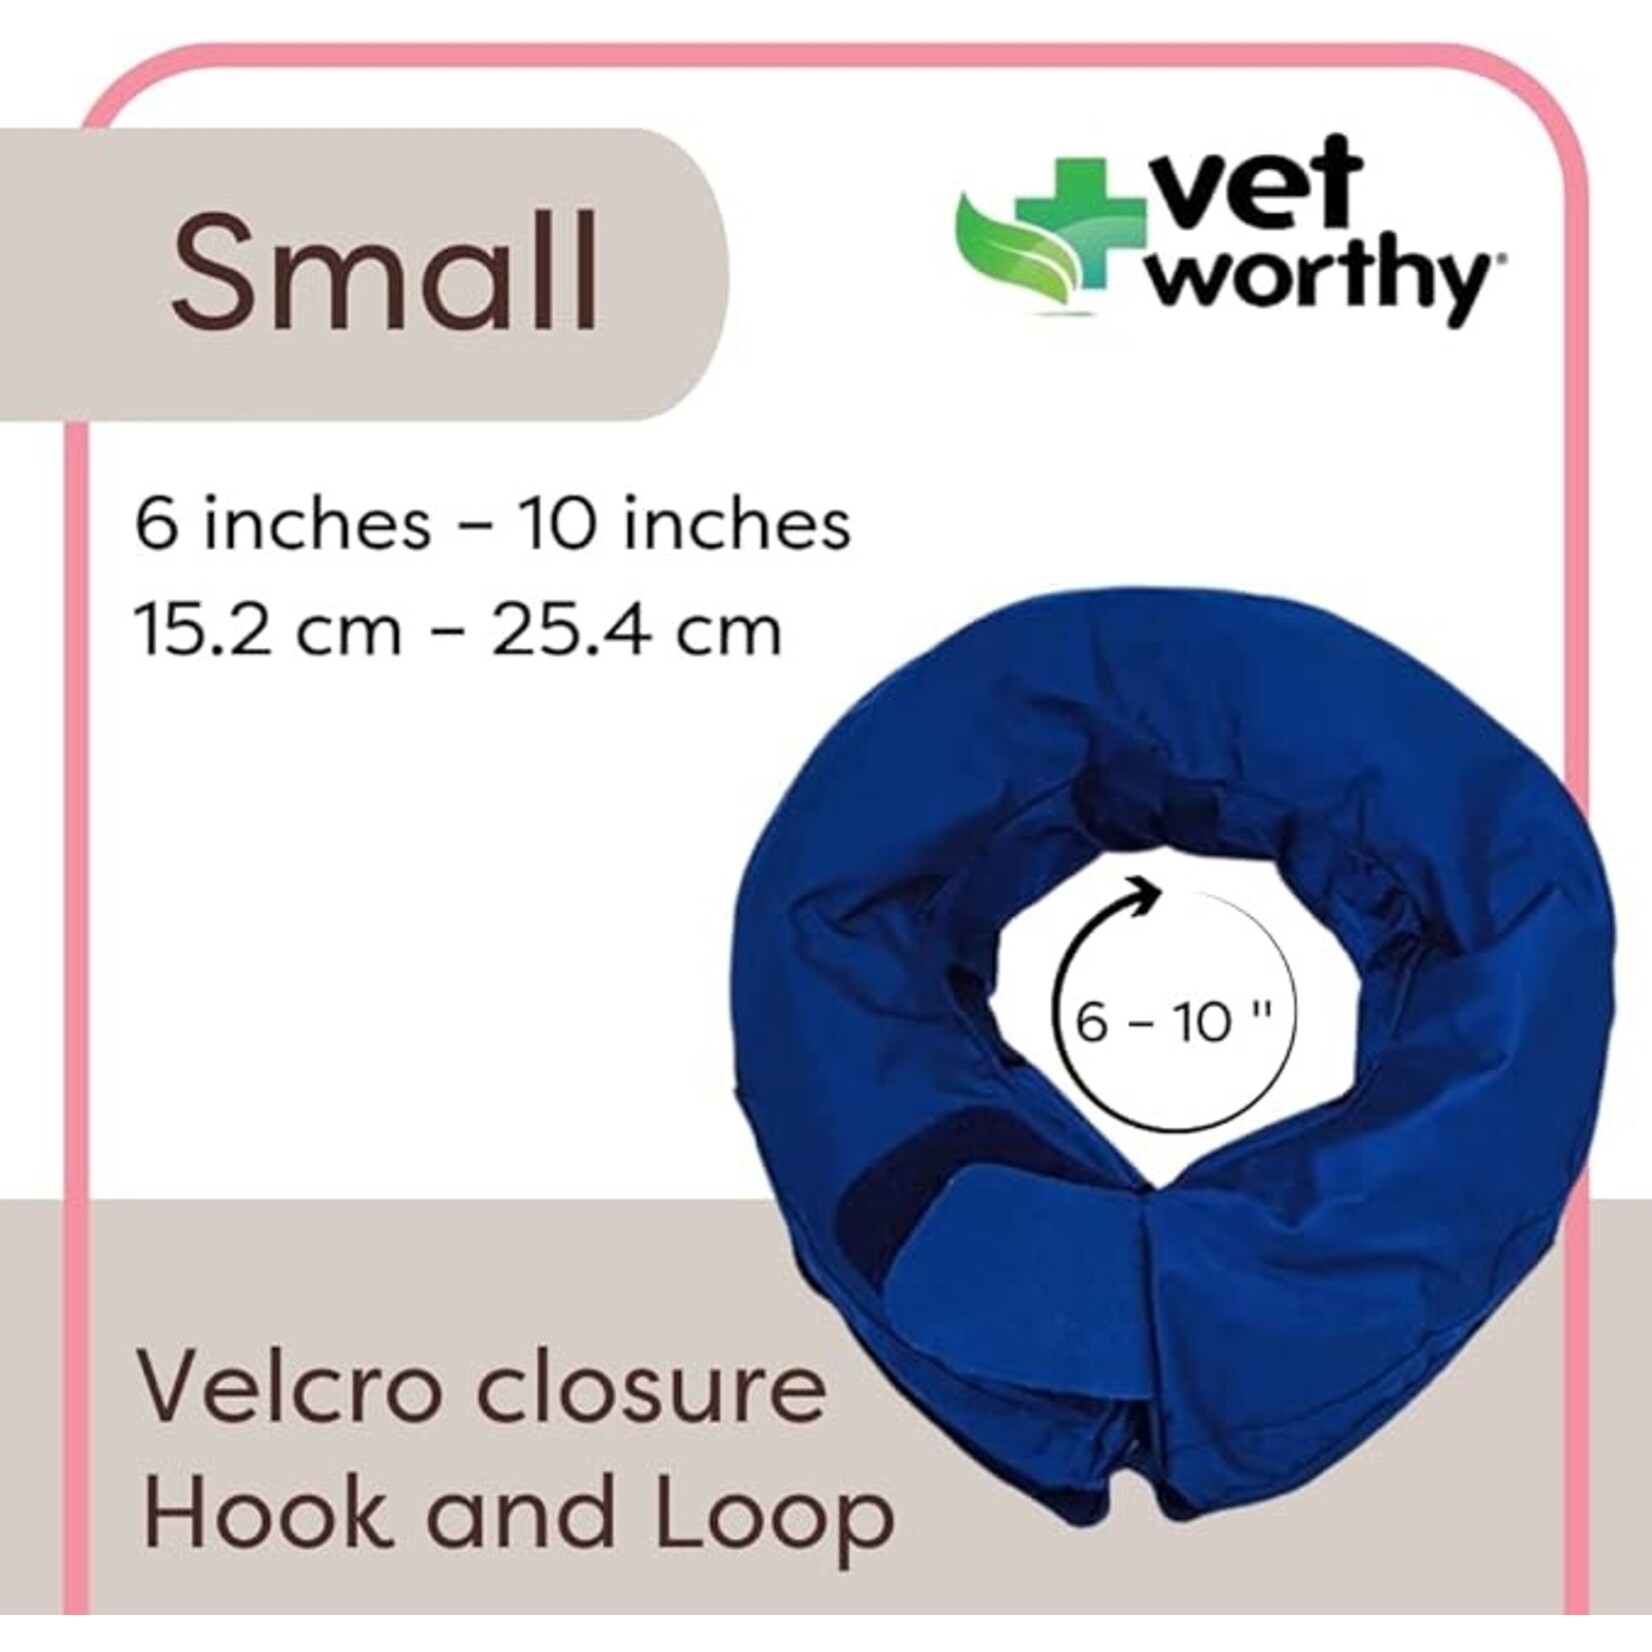 vet worthy Vet Worthy PET SOFT COLLAR SMALL